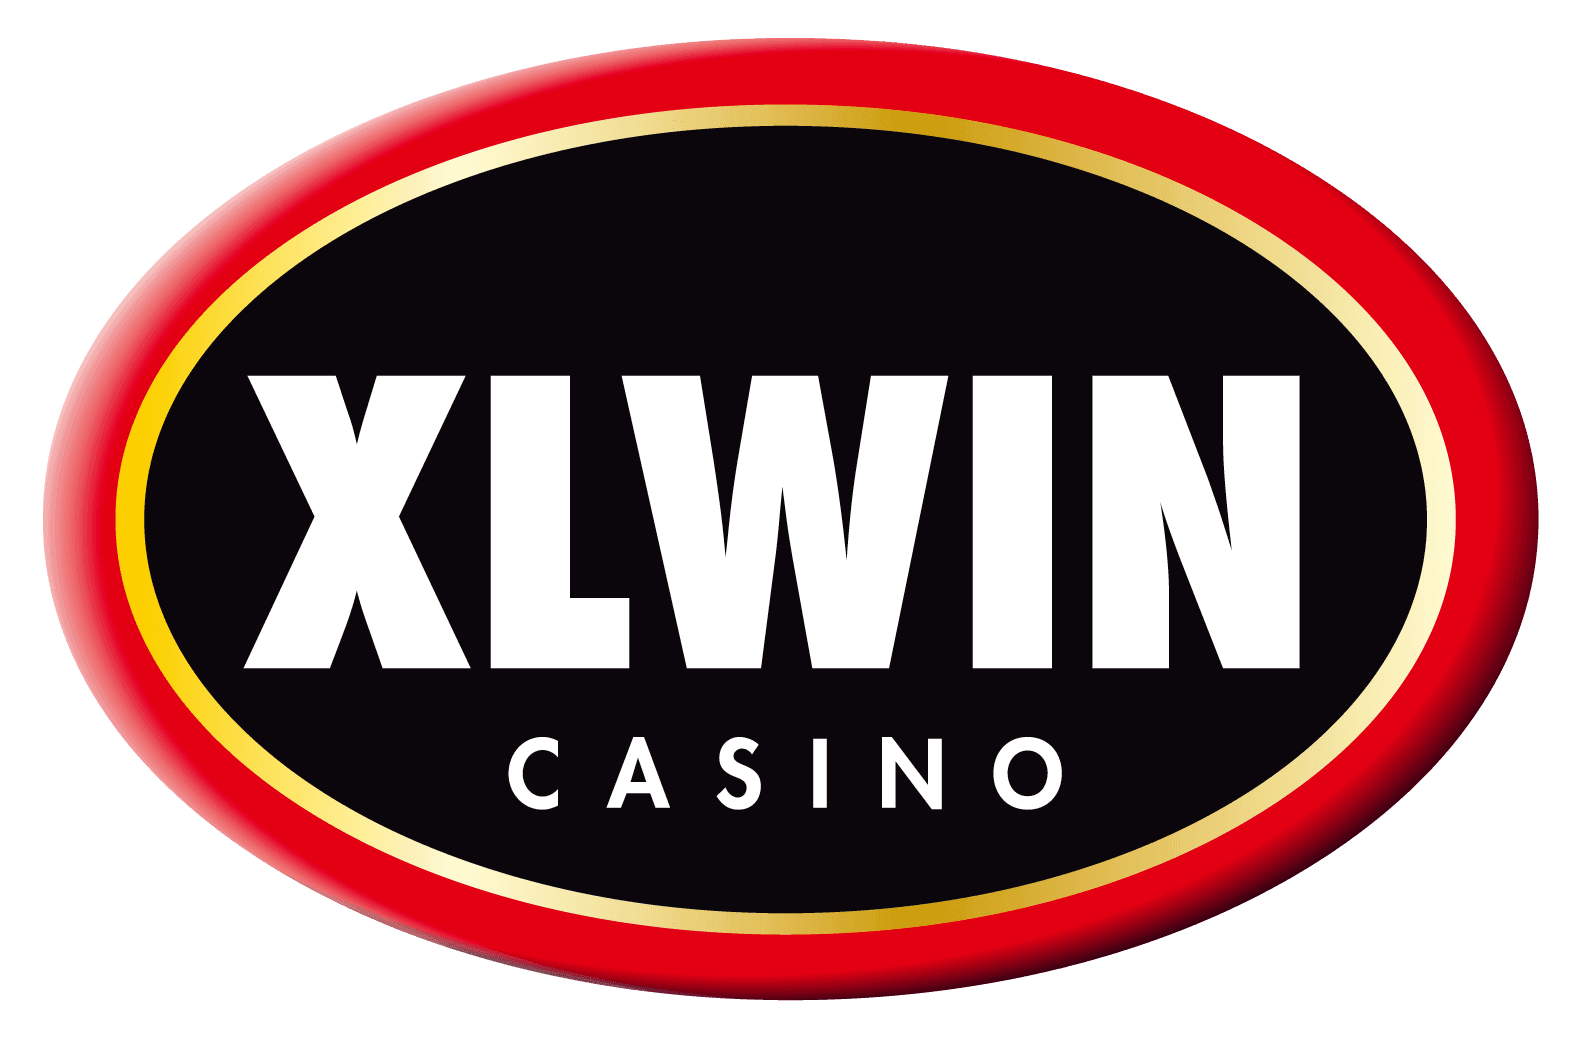 xlwin casino